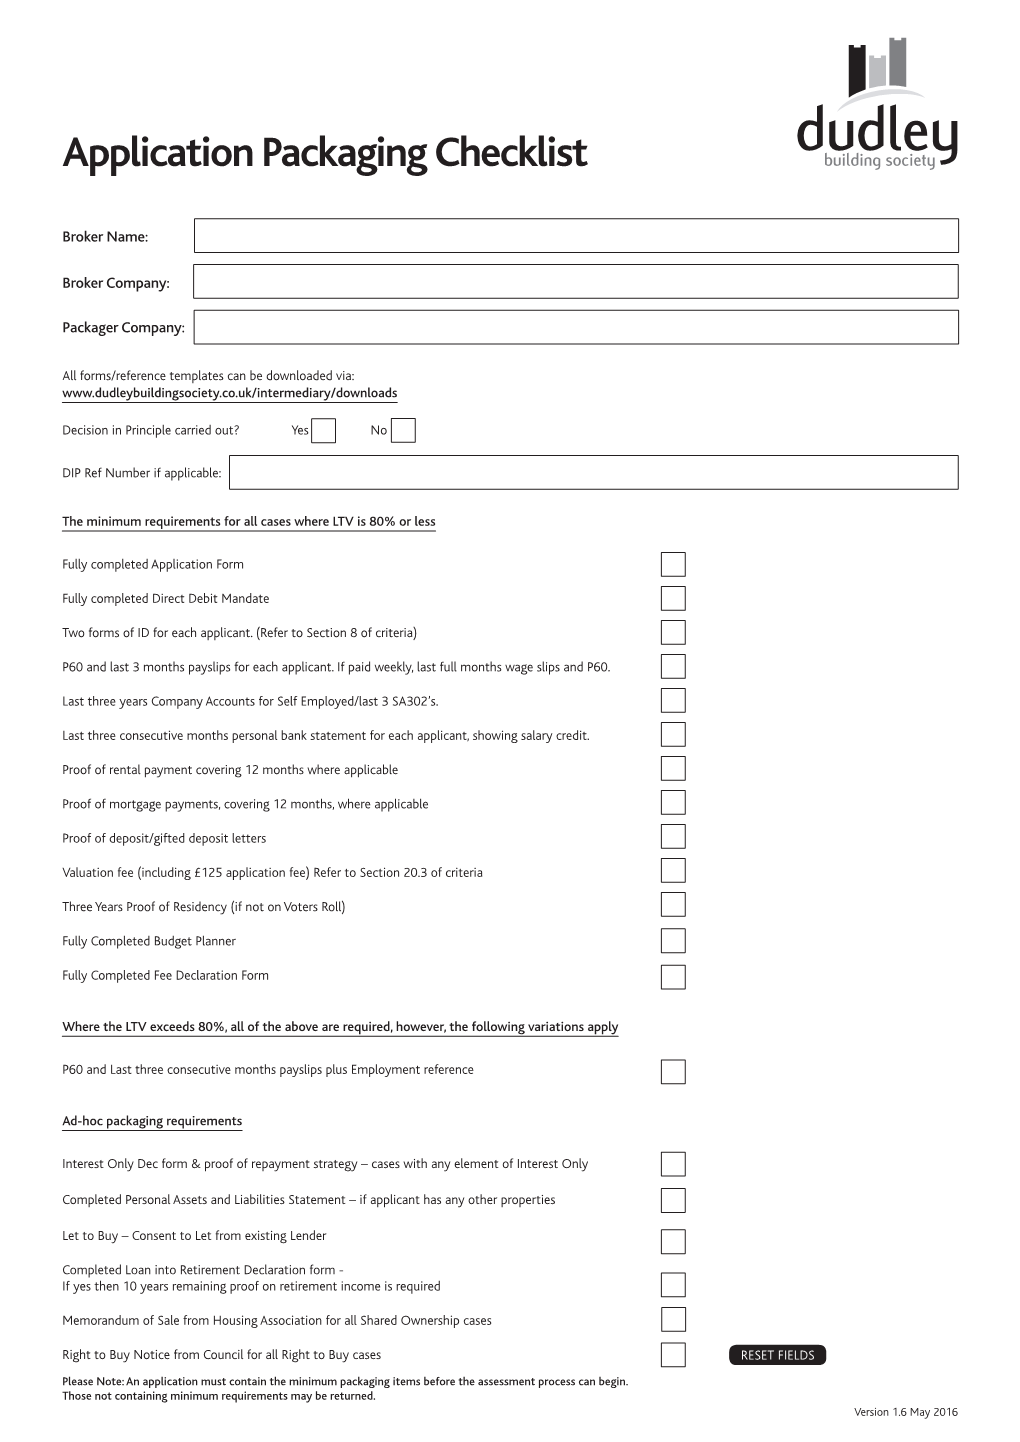 Application Form & Checklist